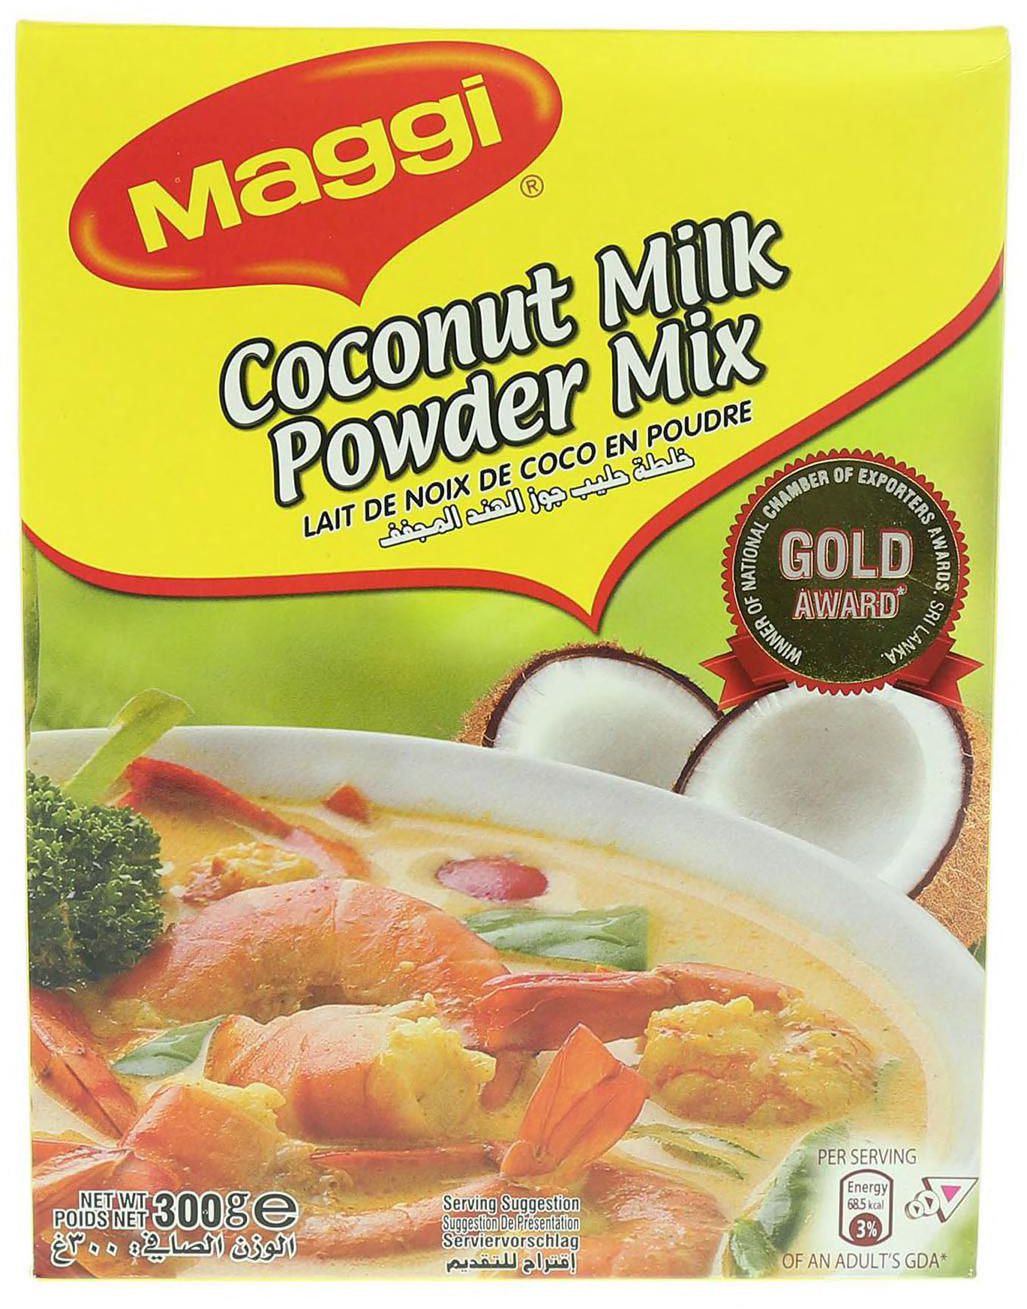 Maggi coconut milk powder mix 300g